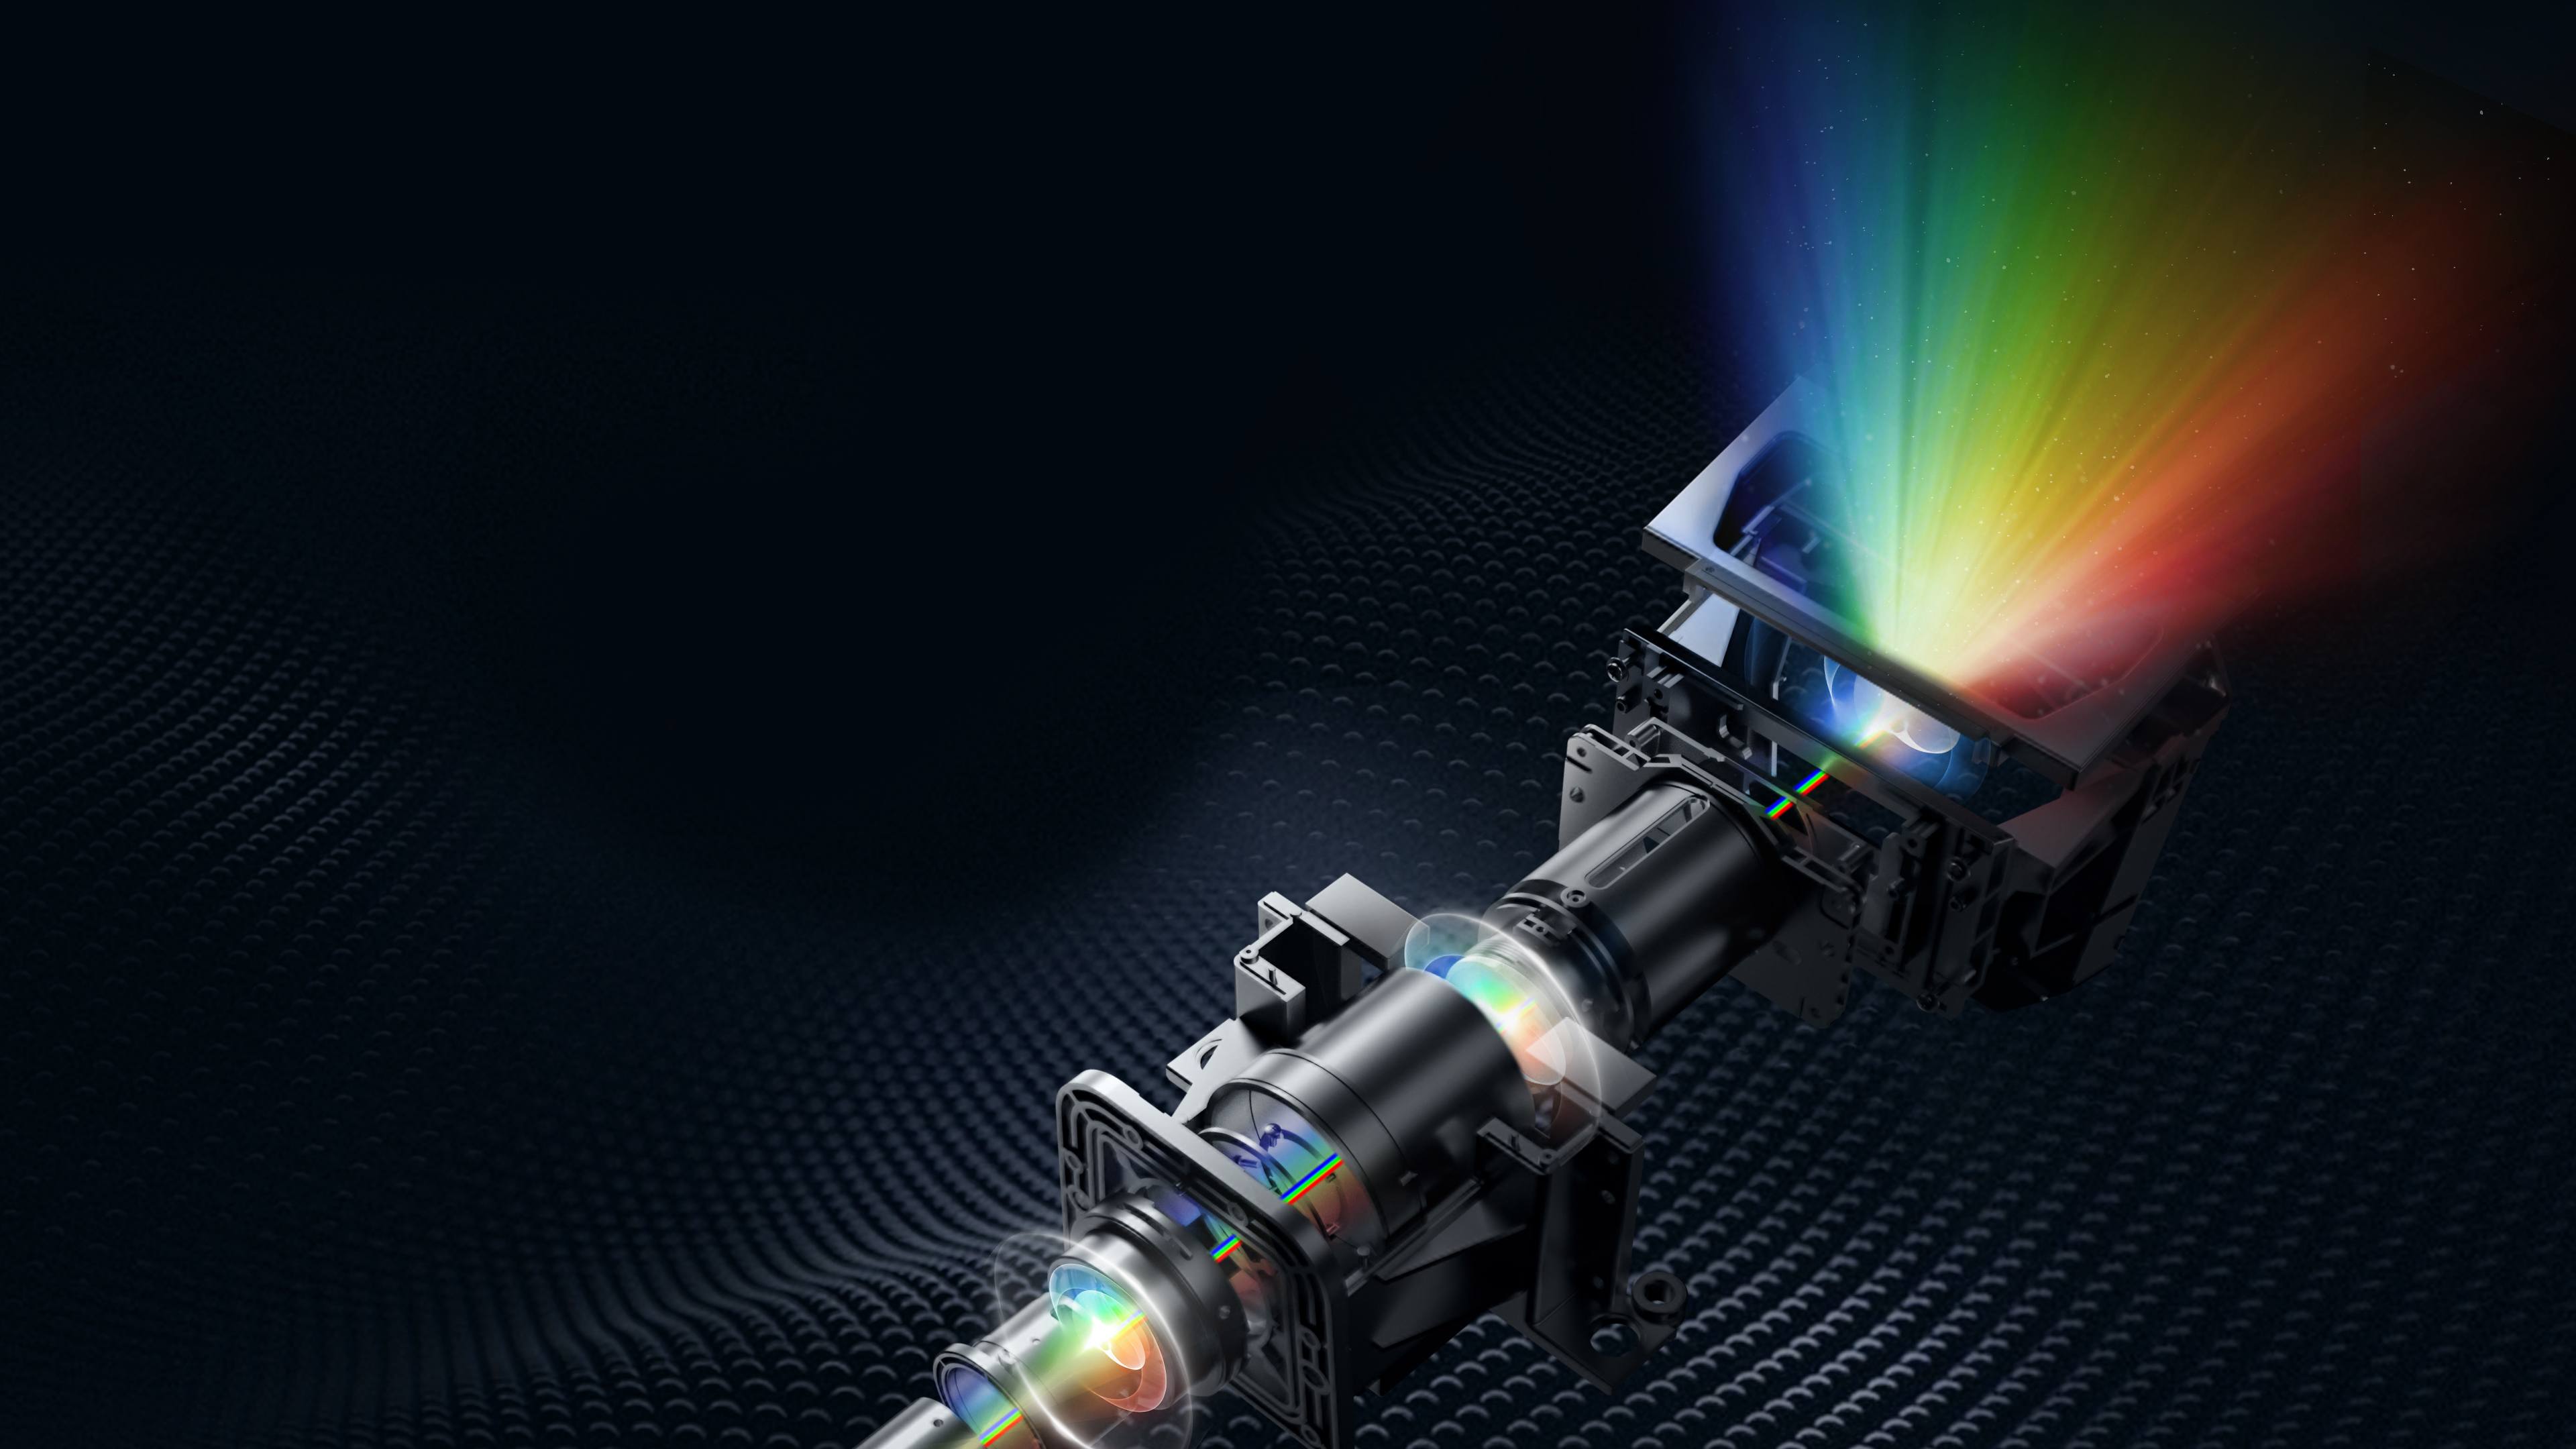 Hisense new C1 Long Throw 4K TriChroma Laser Projector - Blu-ray Forum